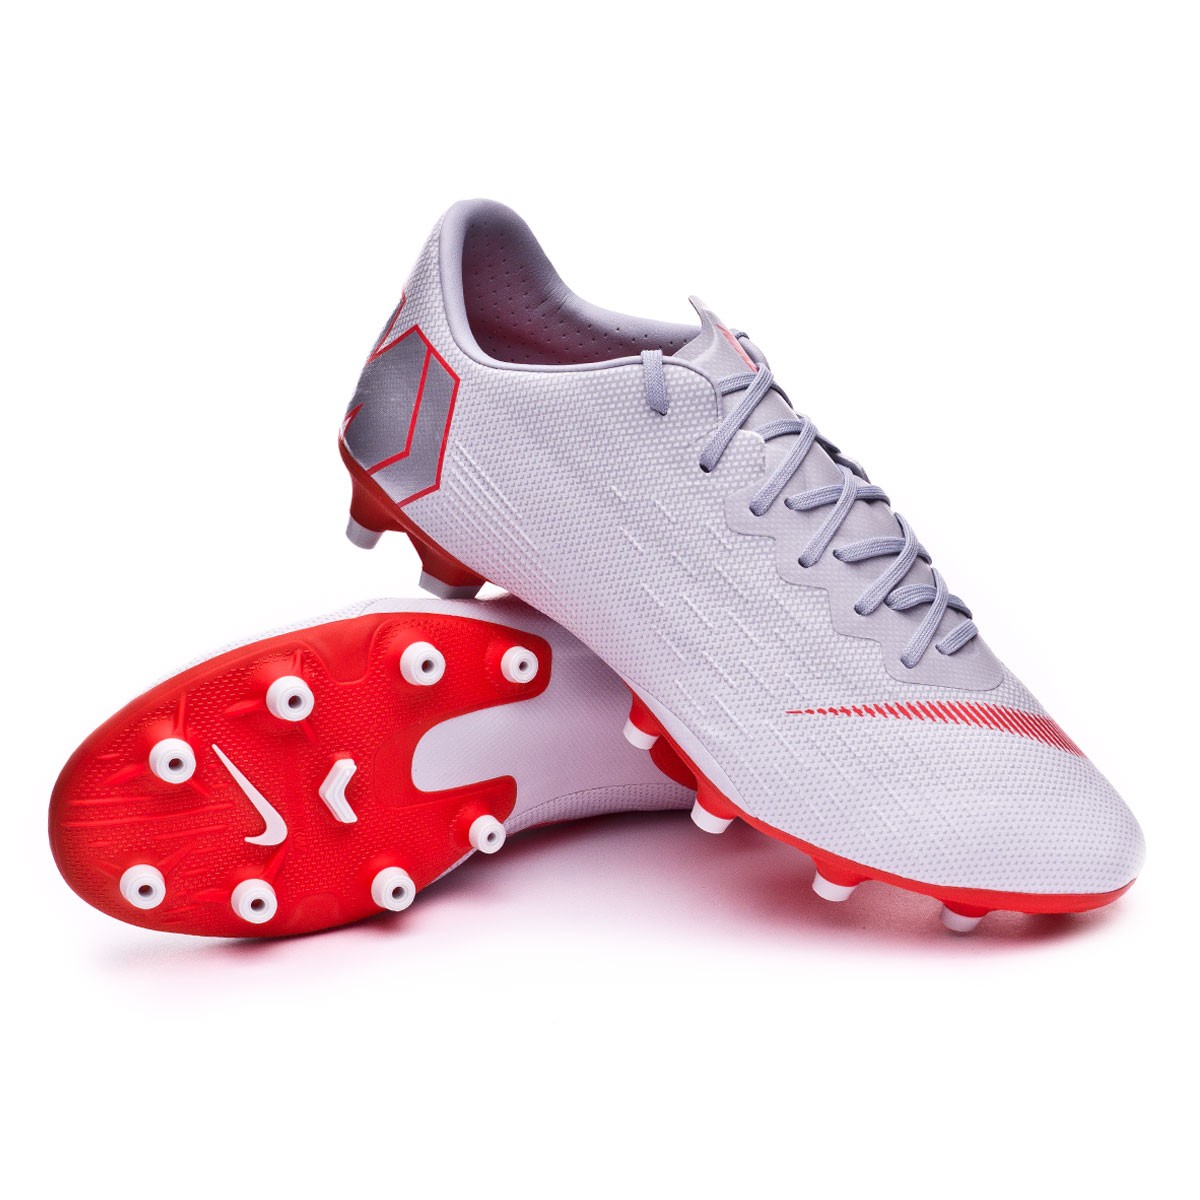 Nike Mercurial Vapor VII FG Sz 12 Mens Soccer Cleats eBay